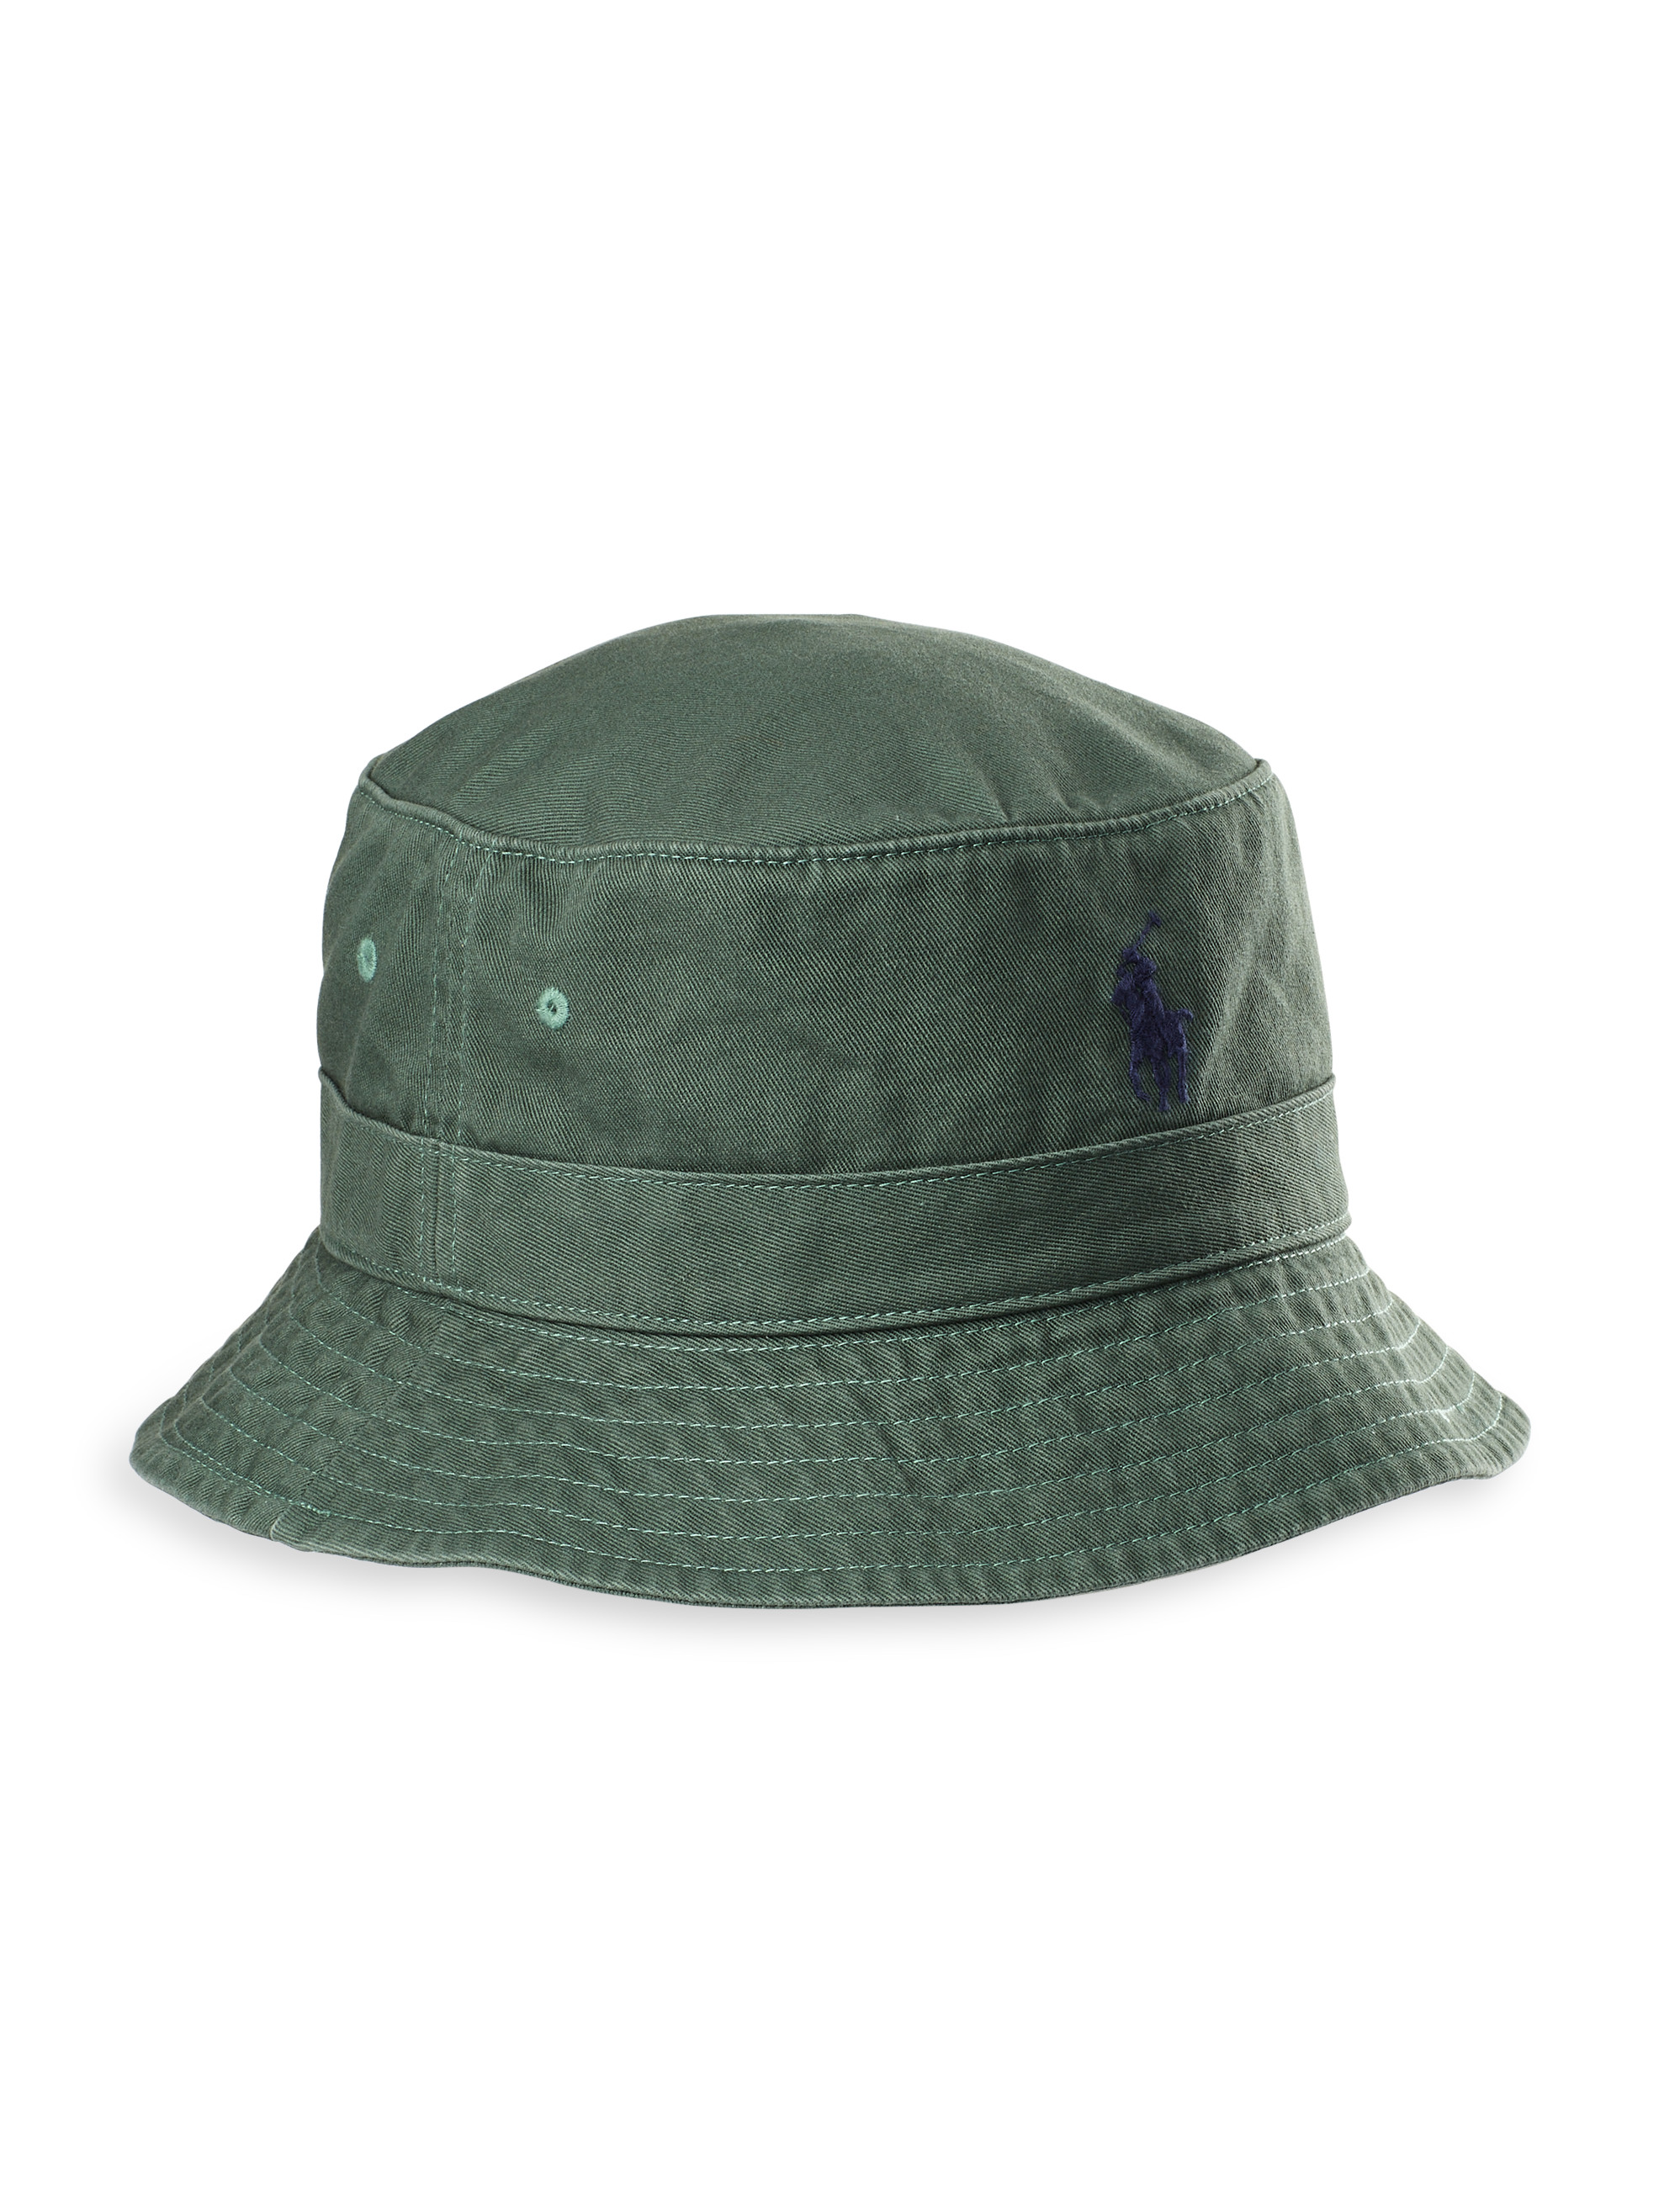 Big Size 3XL/4XL Black Flexfit® Bucket Hat